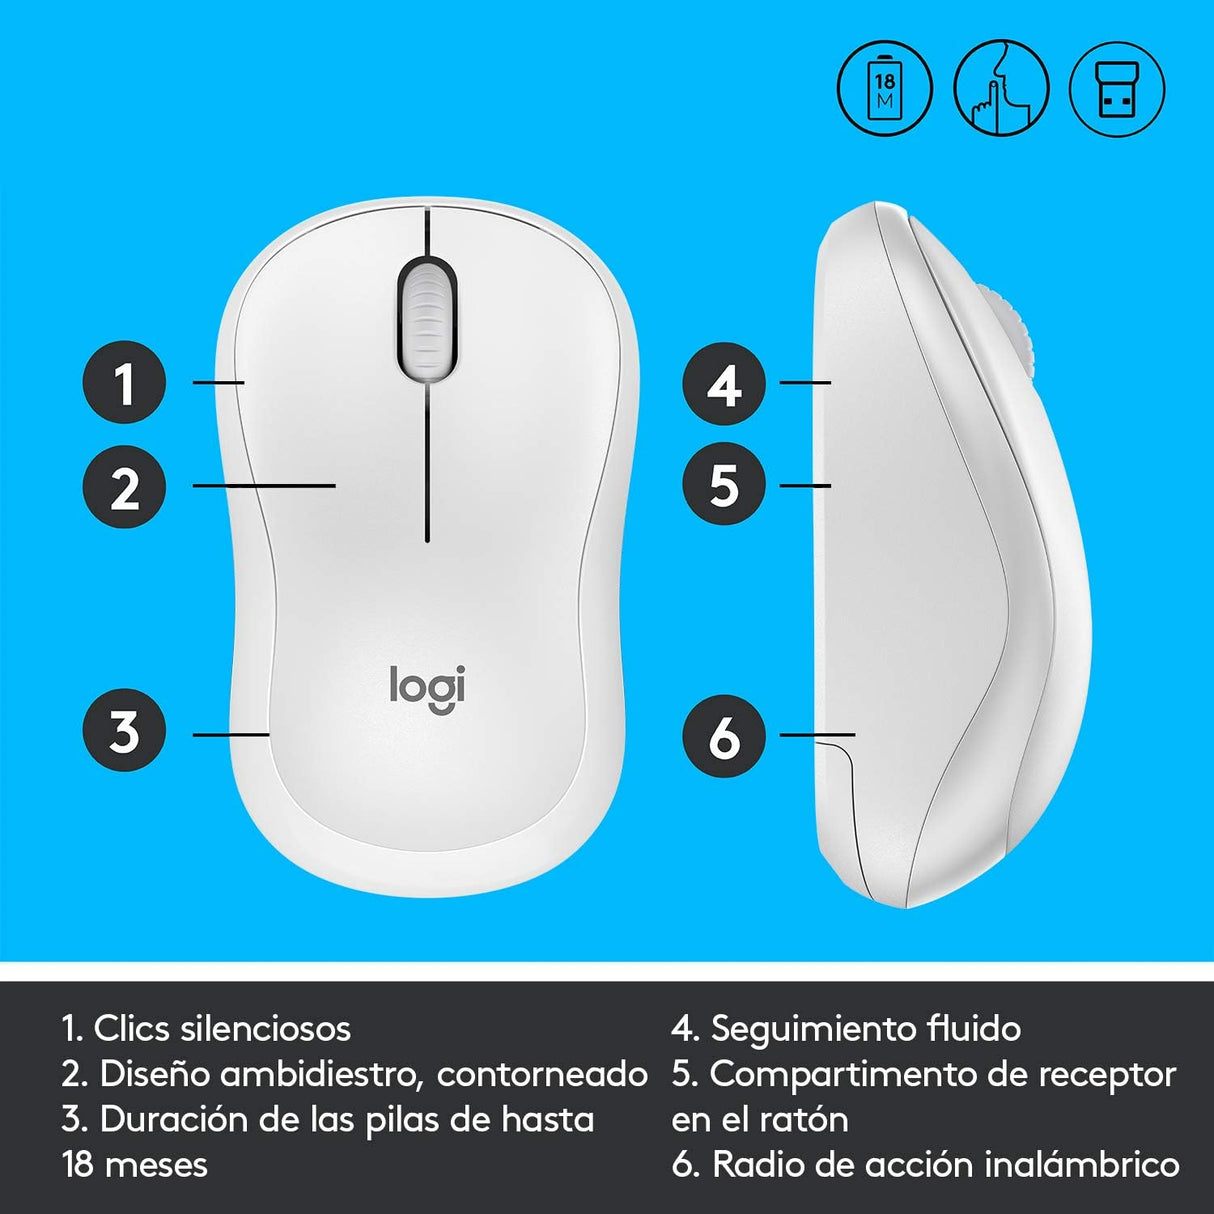 Mouse Wireless Logitech M220 Silencioso USB 1000 DPI Blanco - 910-006126 FullOffice.com